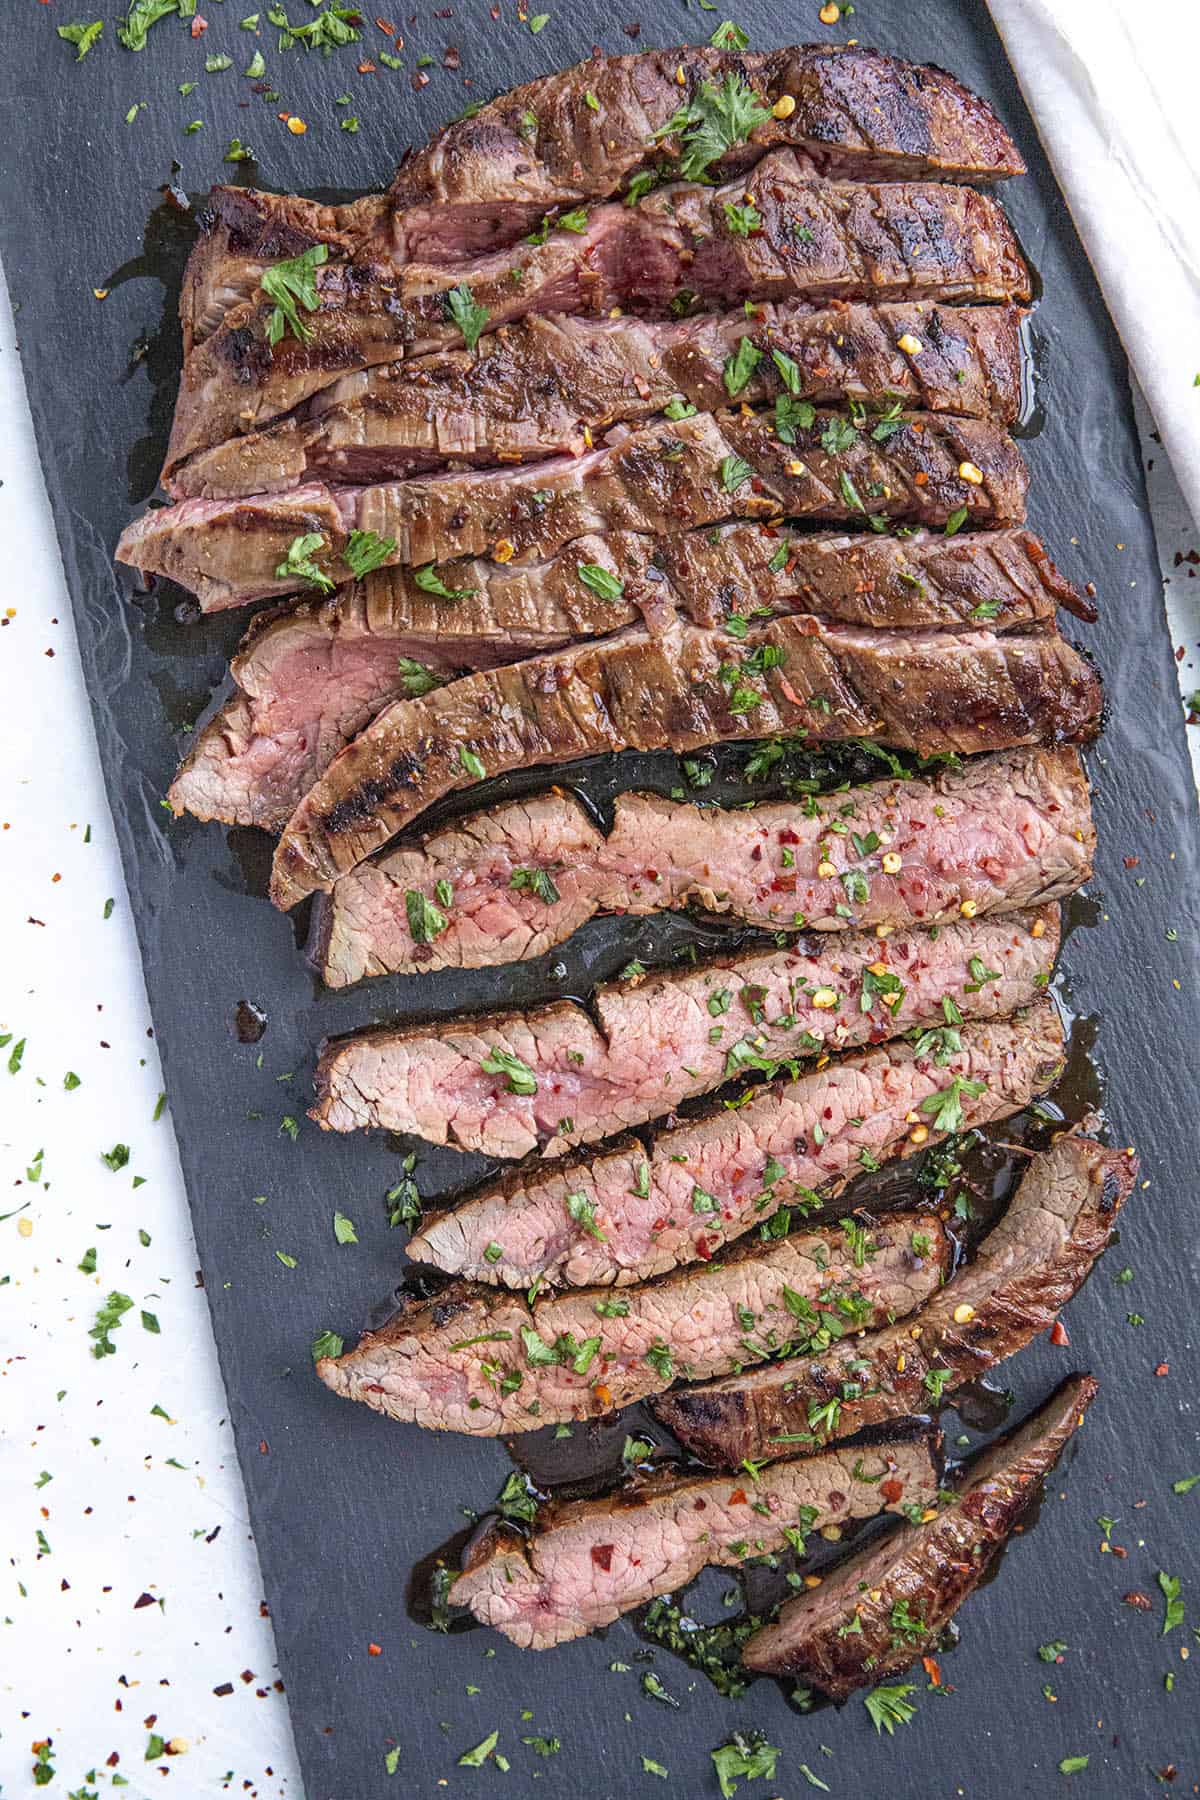 Sliced marinated flank steak ready to eat